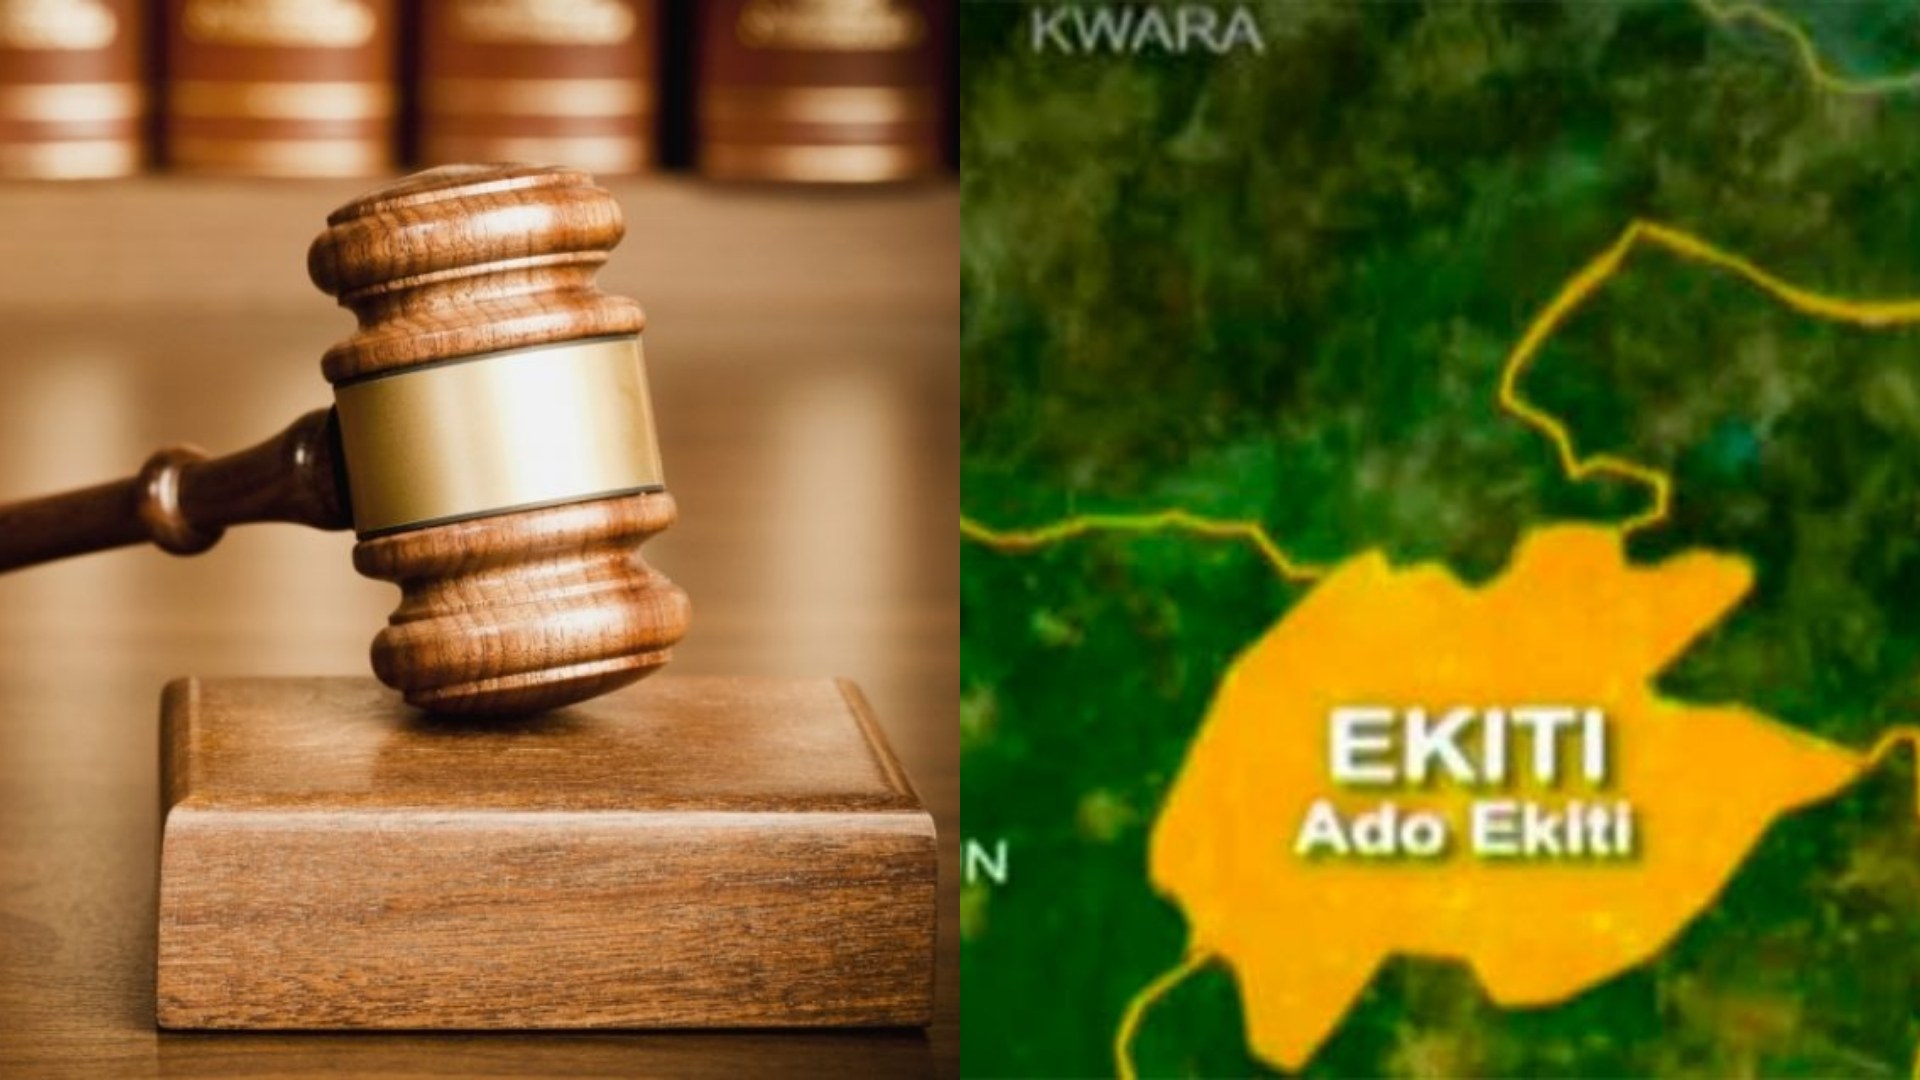 Man in court for stealing 17 kegs of palm oil in Ekiti